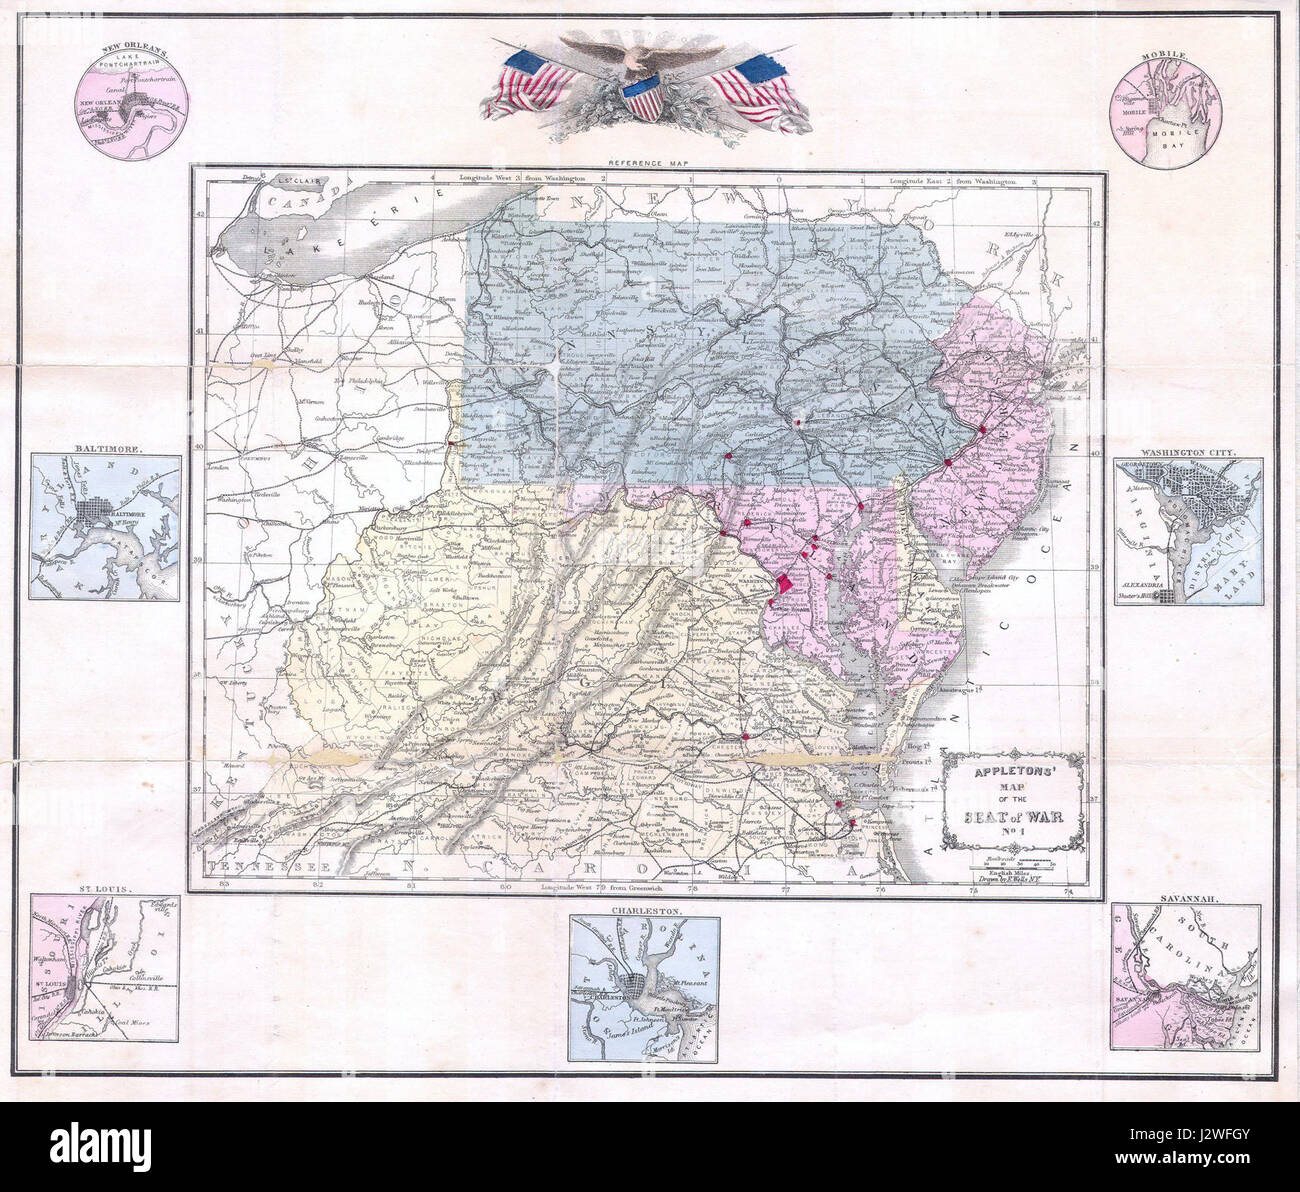 1861 Appleton's Map of the Seat of the Civil War ( Pennsylvania, Virginia, Maryland, North Carolina - Geographicus - SeatofCivilWar-appleton-1861 Stock Photo